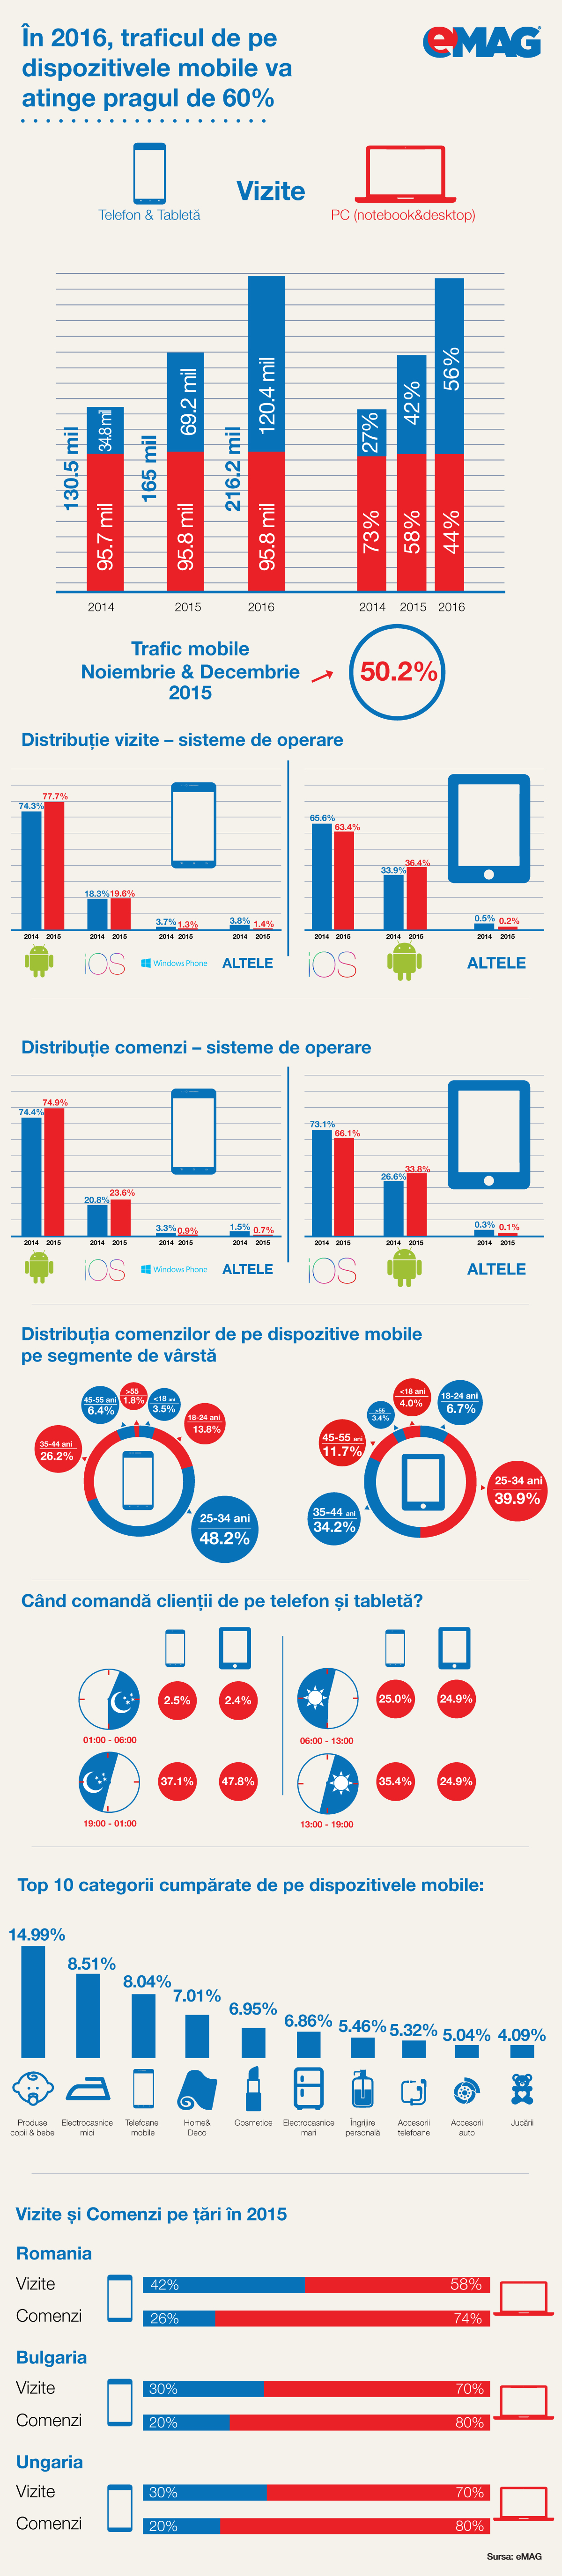 Infografic mobile eMAG 2015